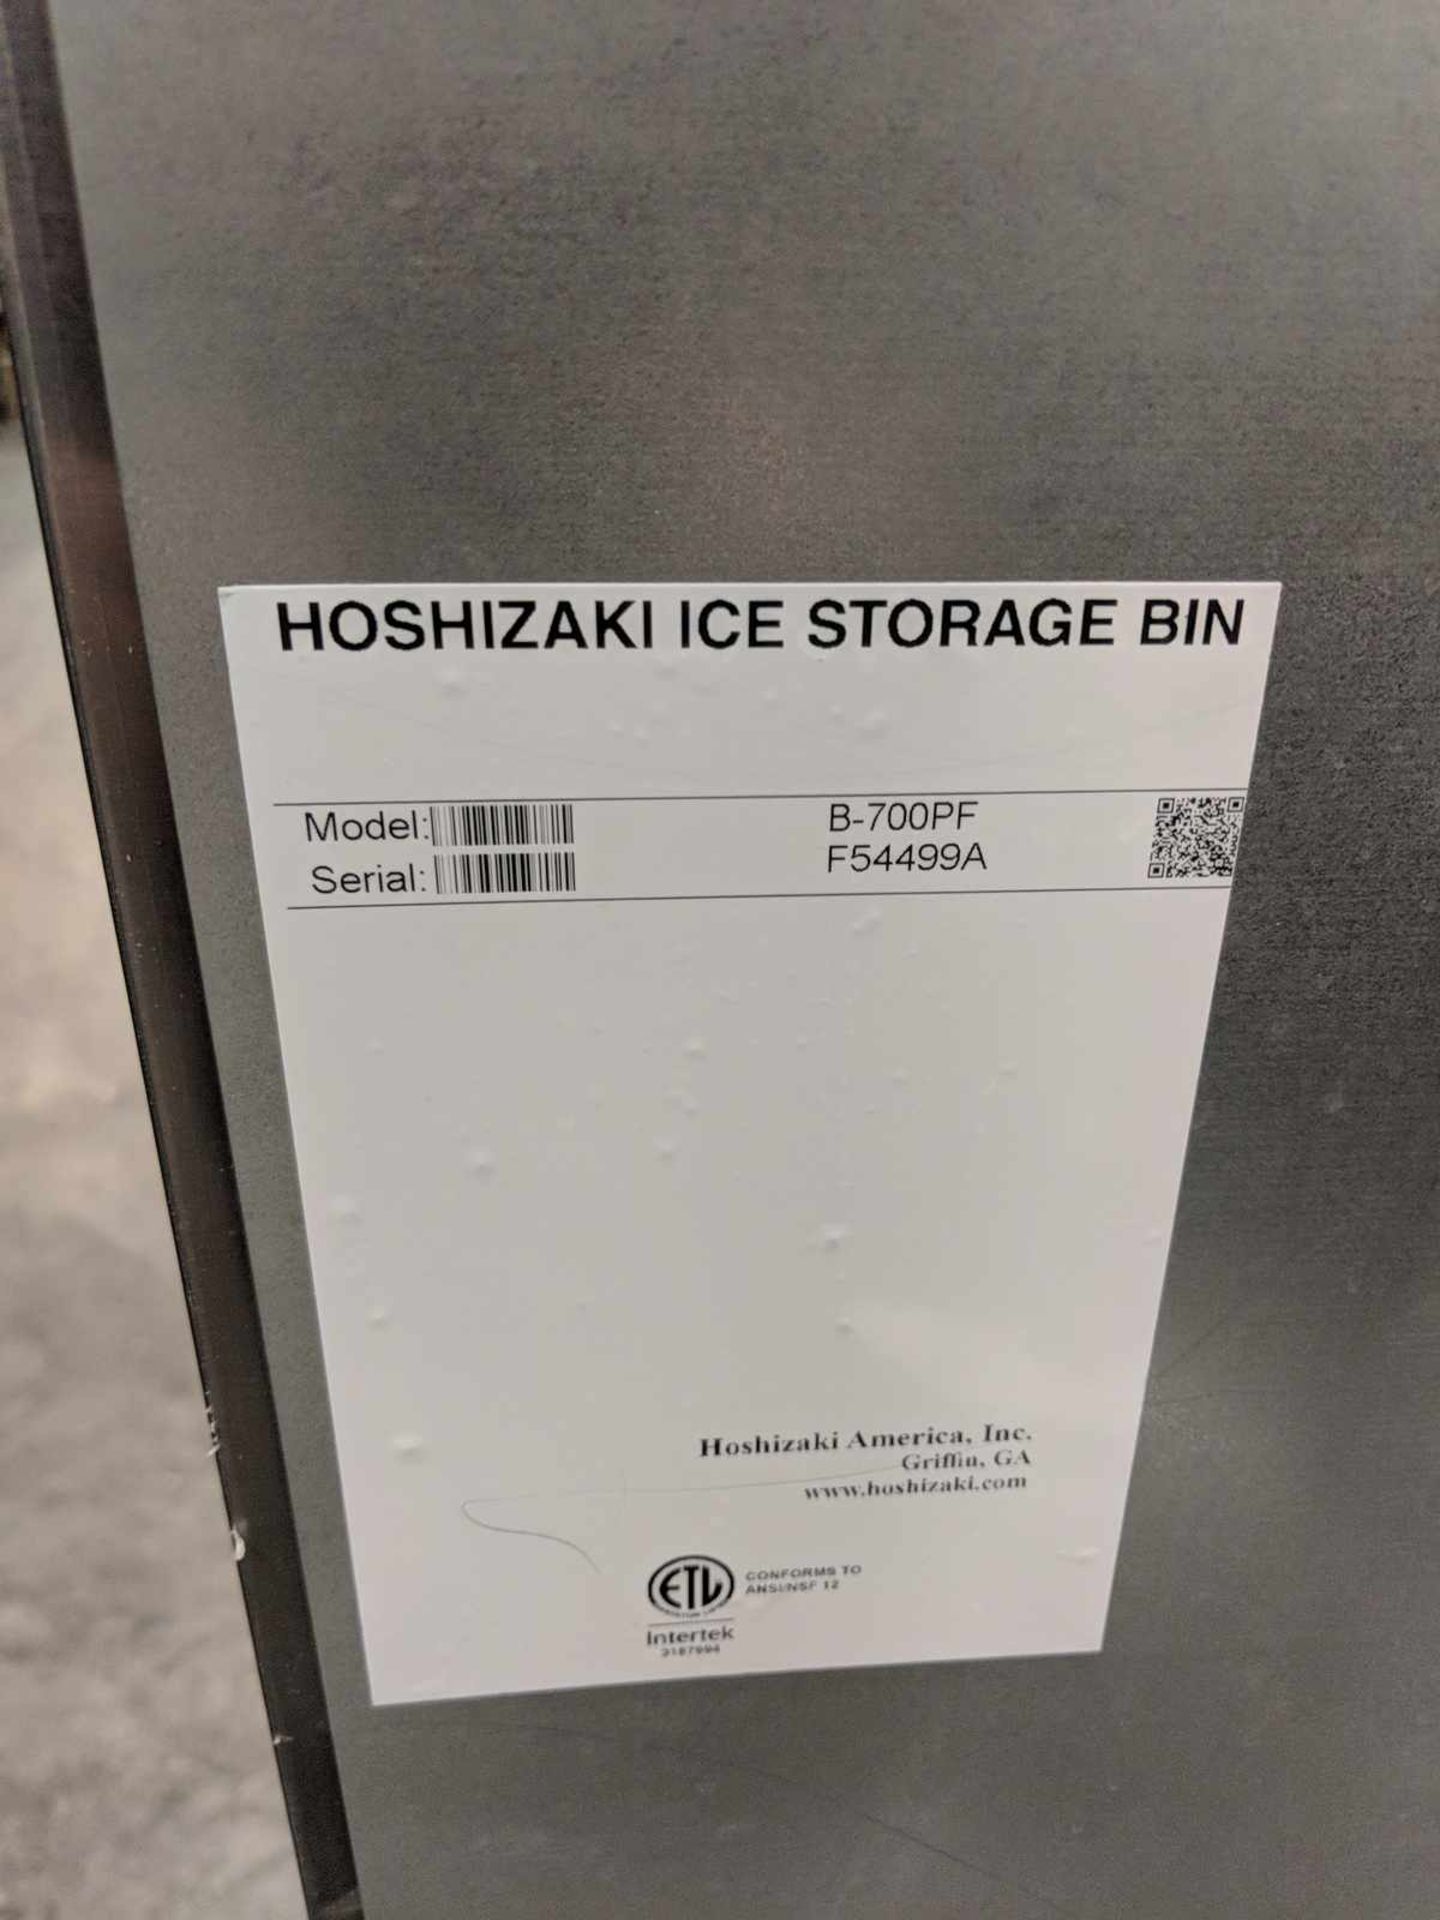 Hoshizaki 920lb Crescent Cube Ice Machine with 700lb 44" Ice Storage Bin - Image 6 of 6